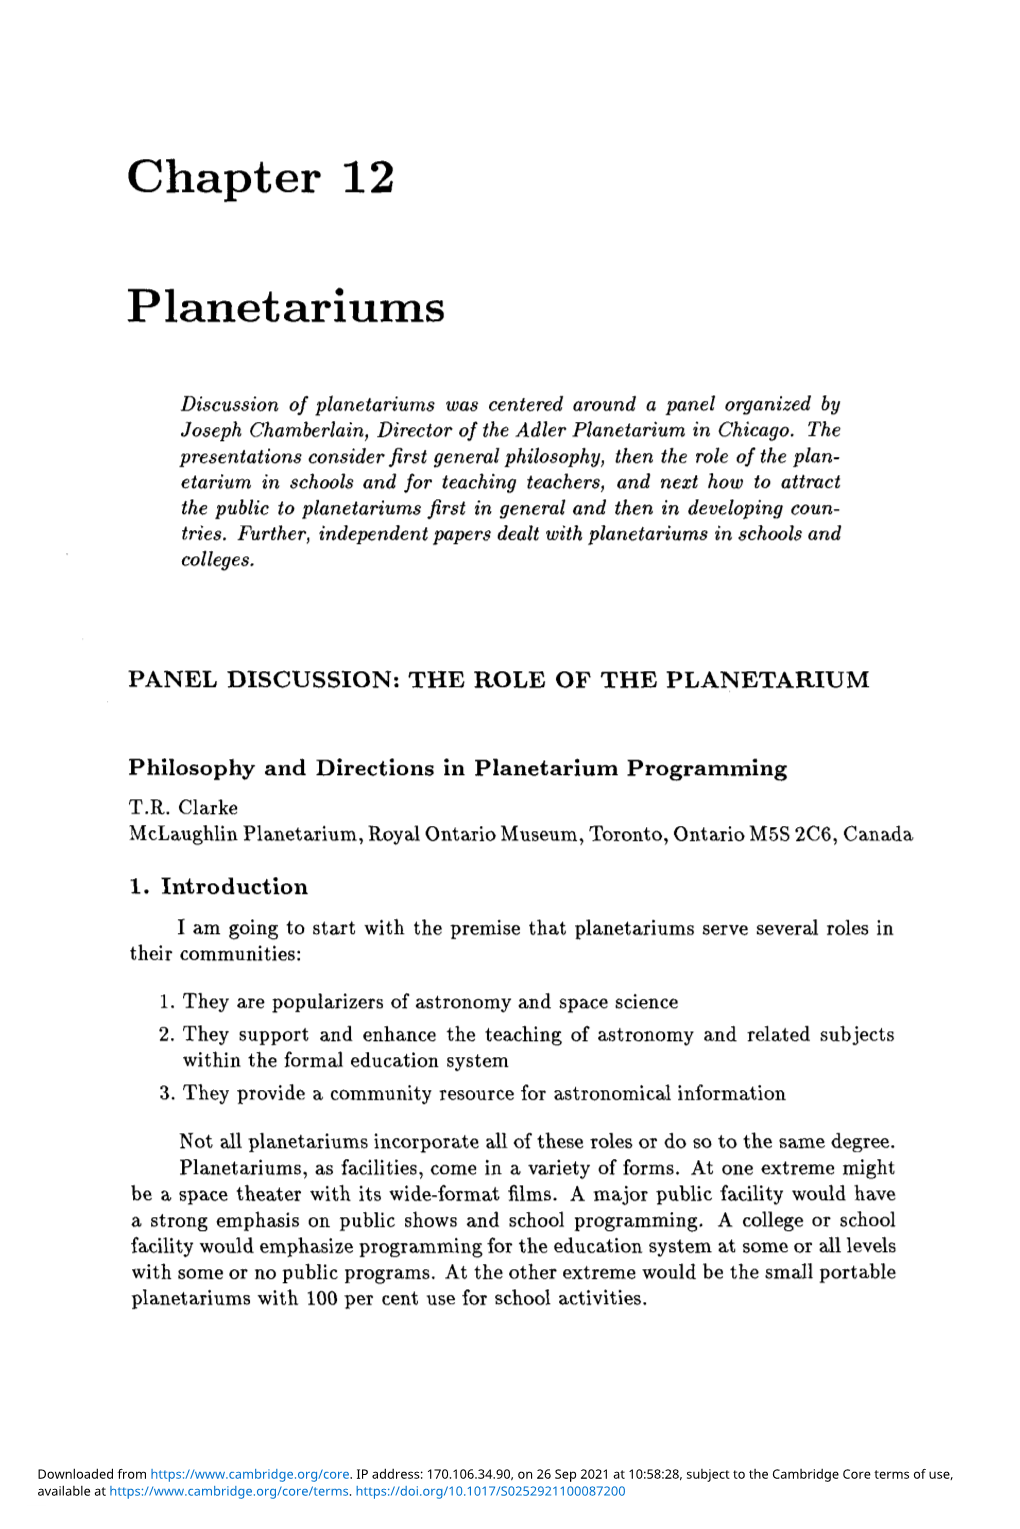 Chapter 12 Planetariums